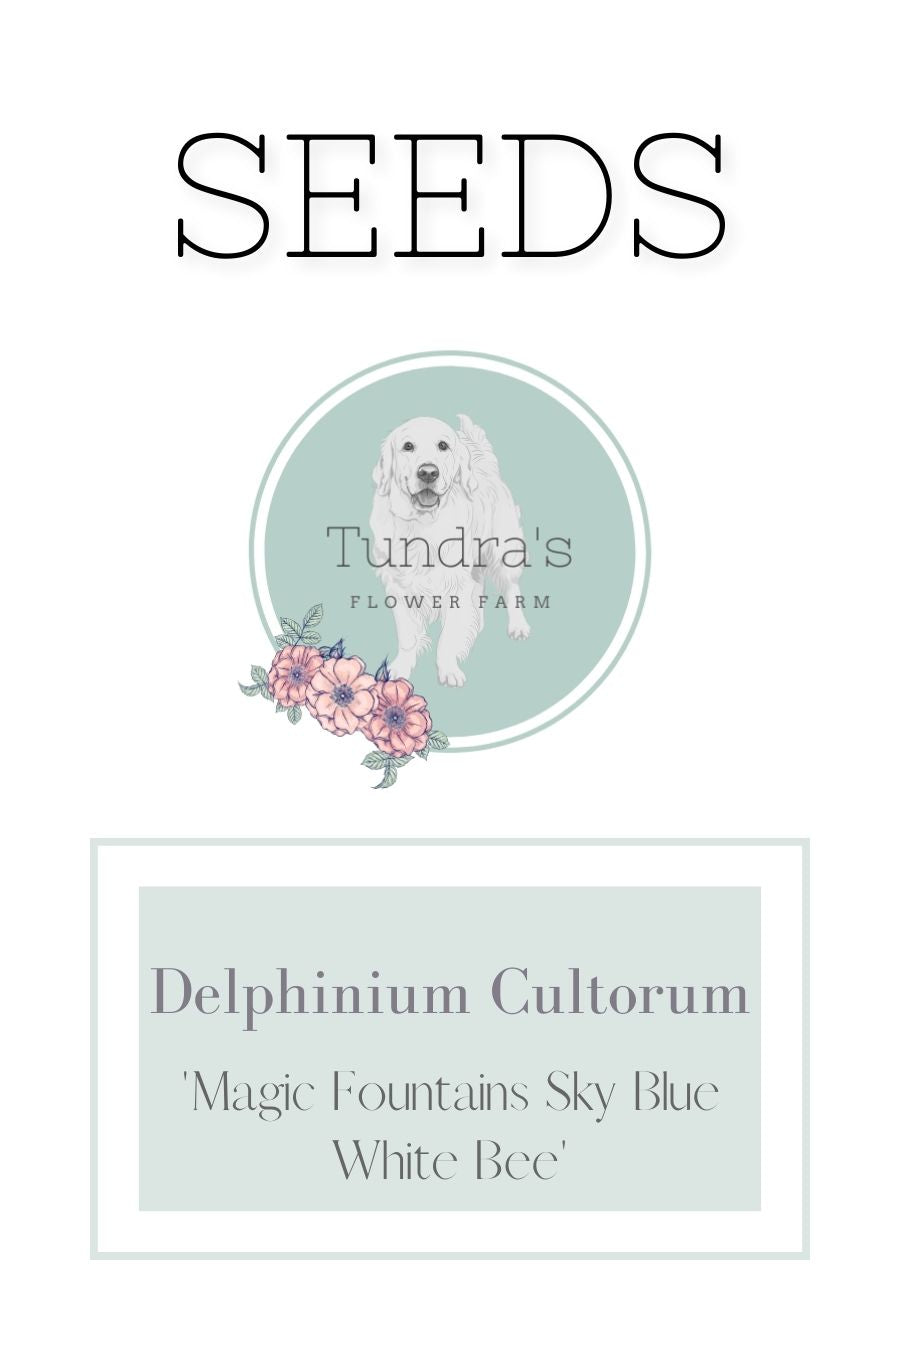 Delphinium Cultorum Seeds - Magic Fountains Sky Blue White Bee